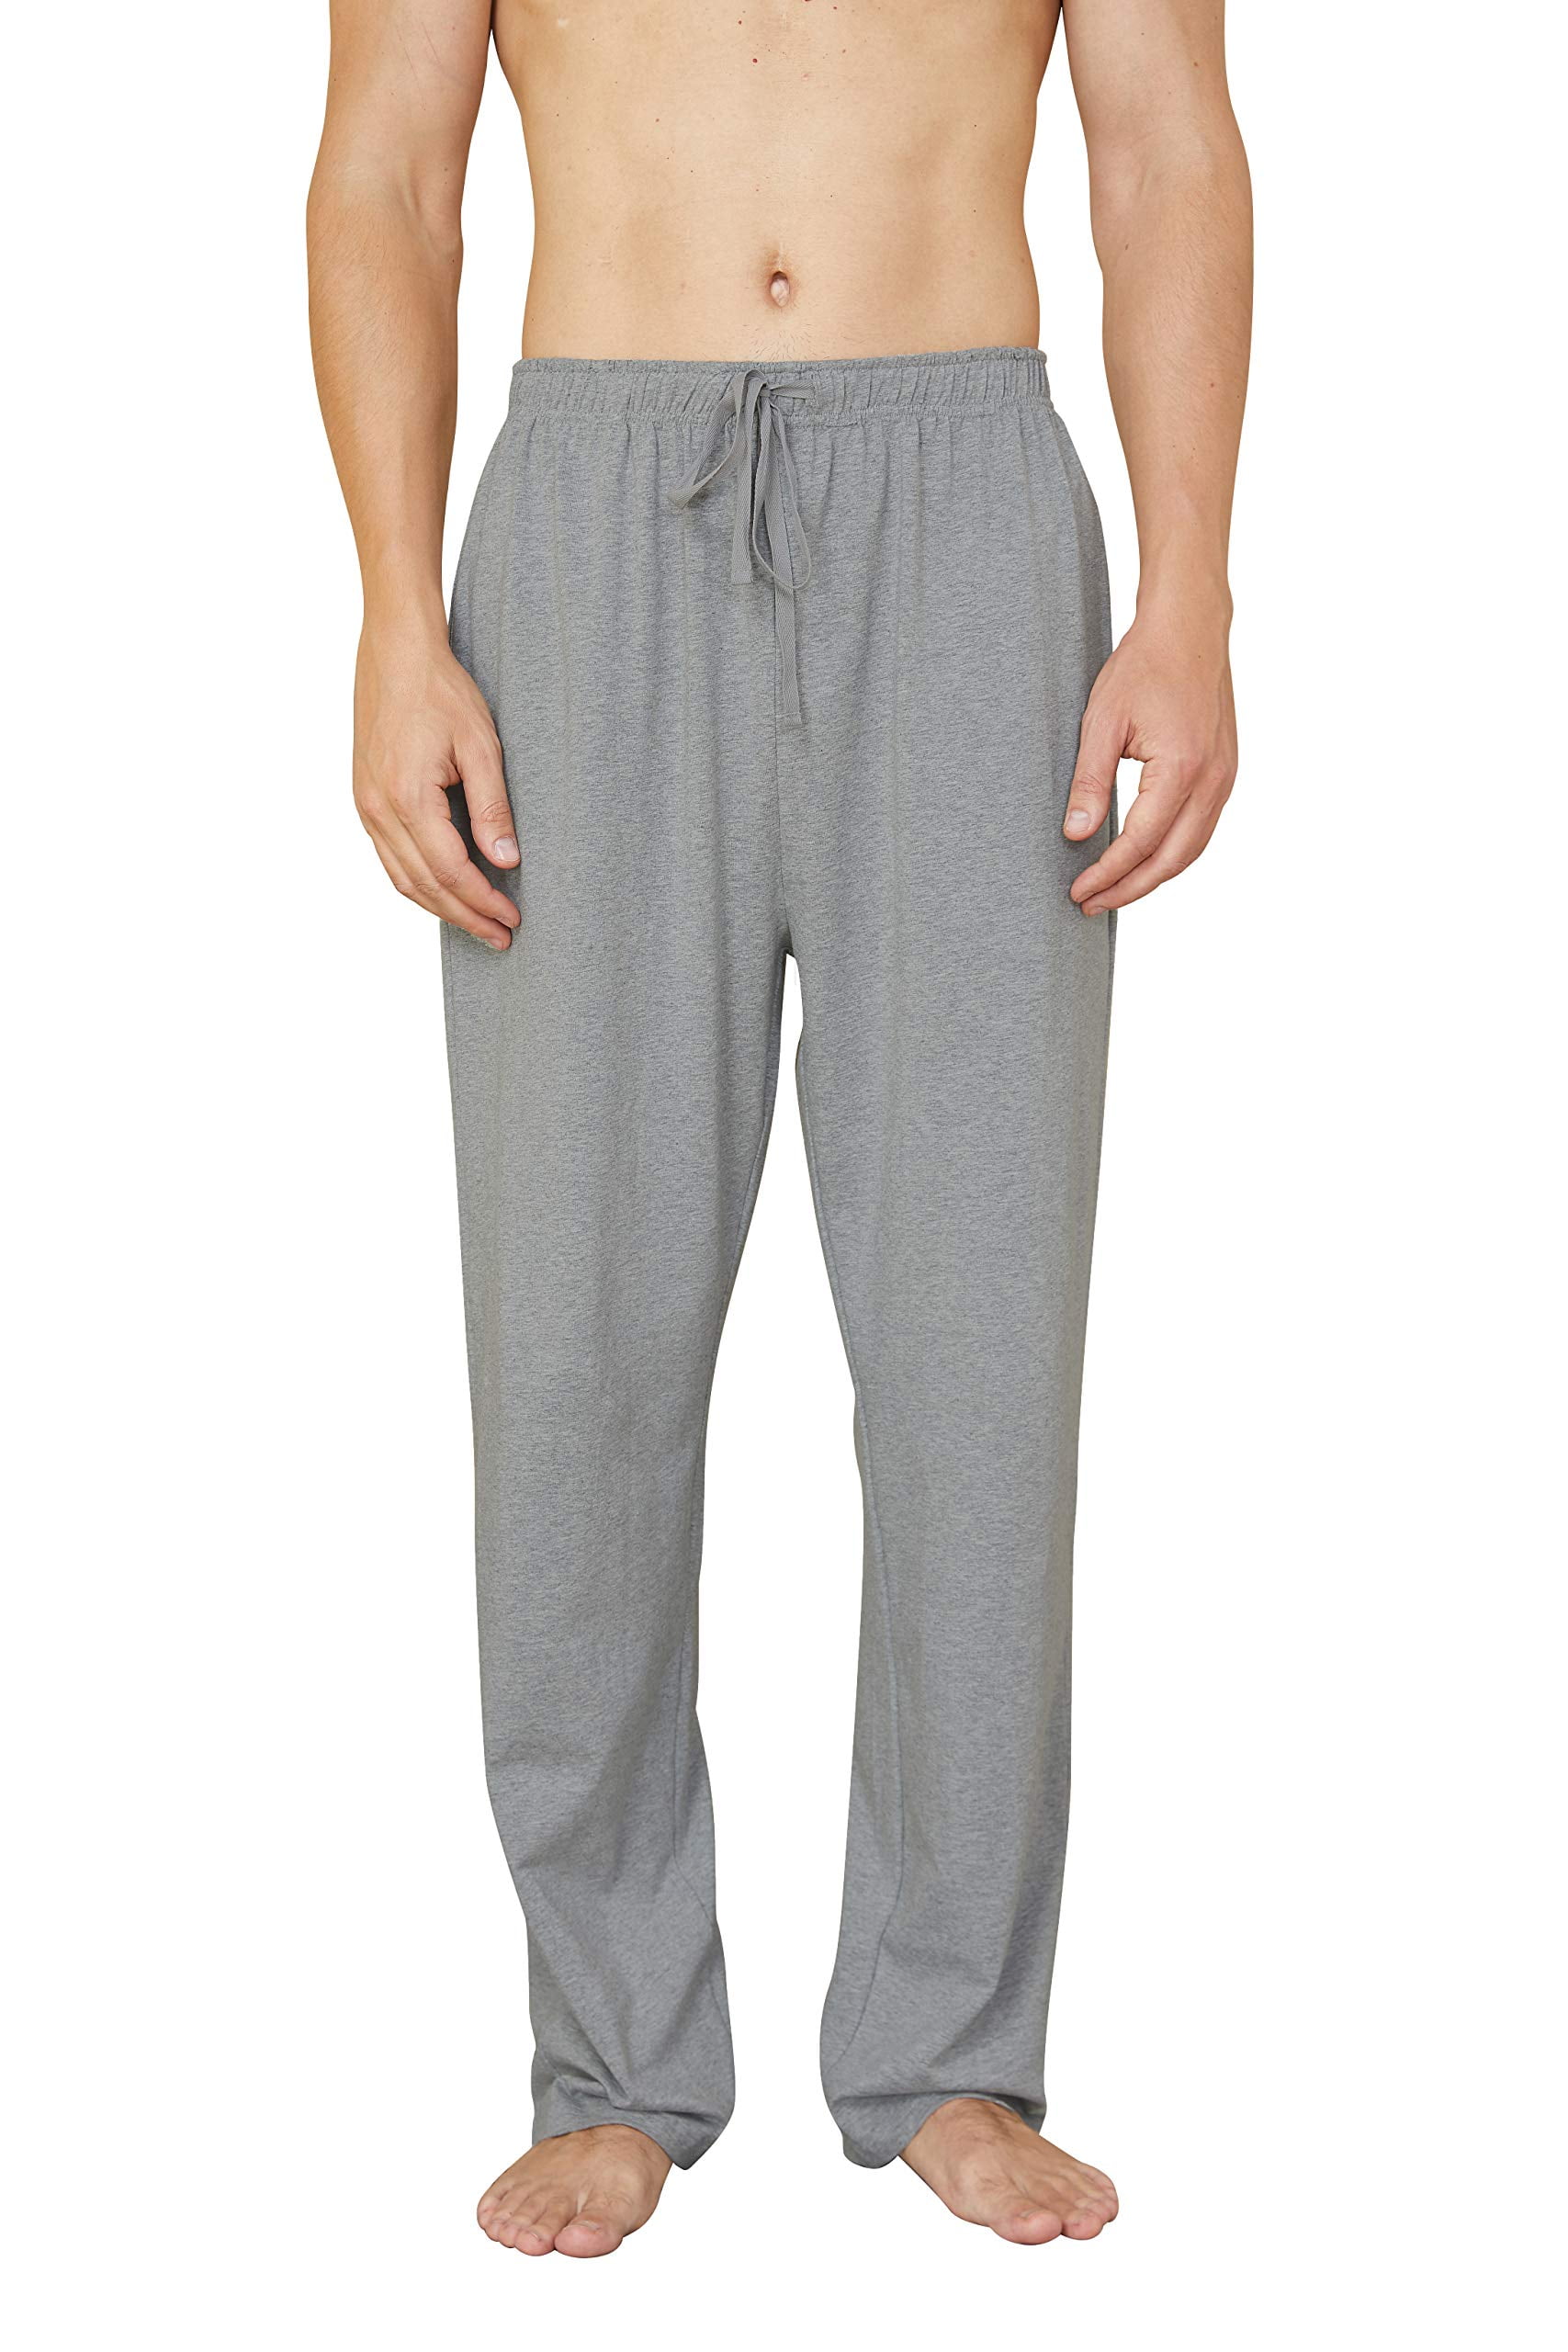 Pajama Pants for Men - 3 Pack Pajama Bottoms - Cotton Blend Flannel Plaid  Lounge Pants, Comfortable PJ Pants (Set C, Small) at Amazon Men's Clothing  store